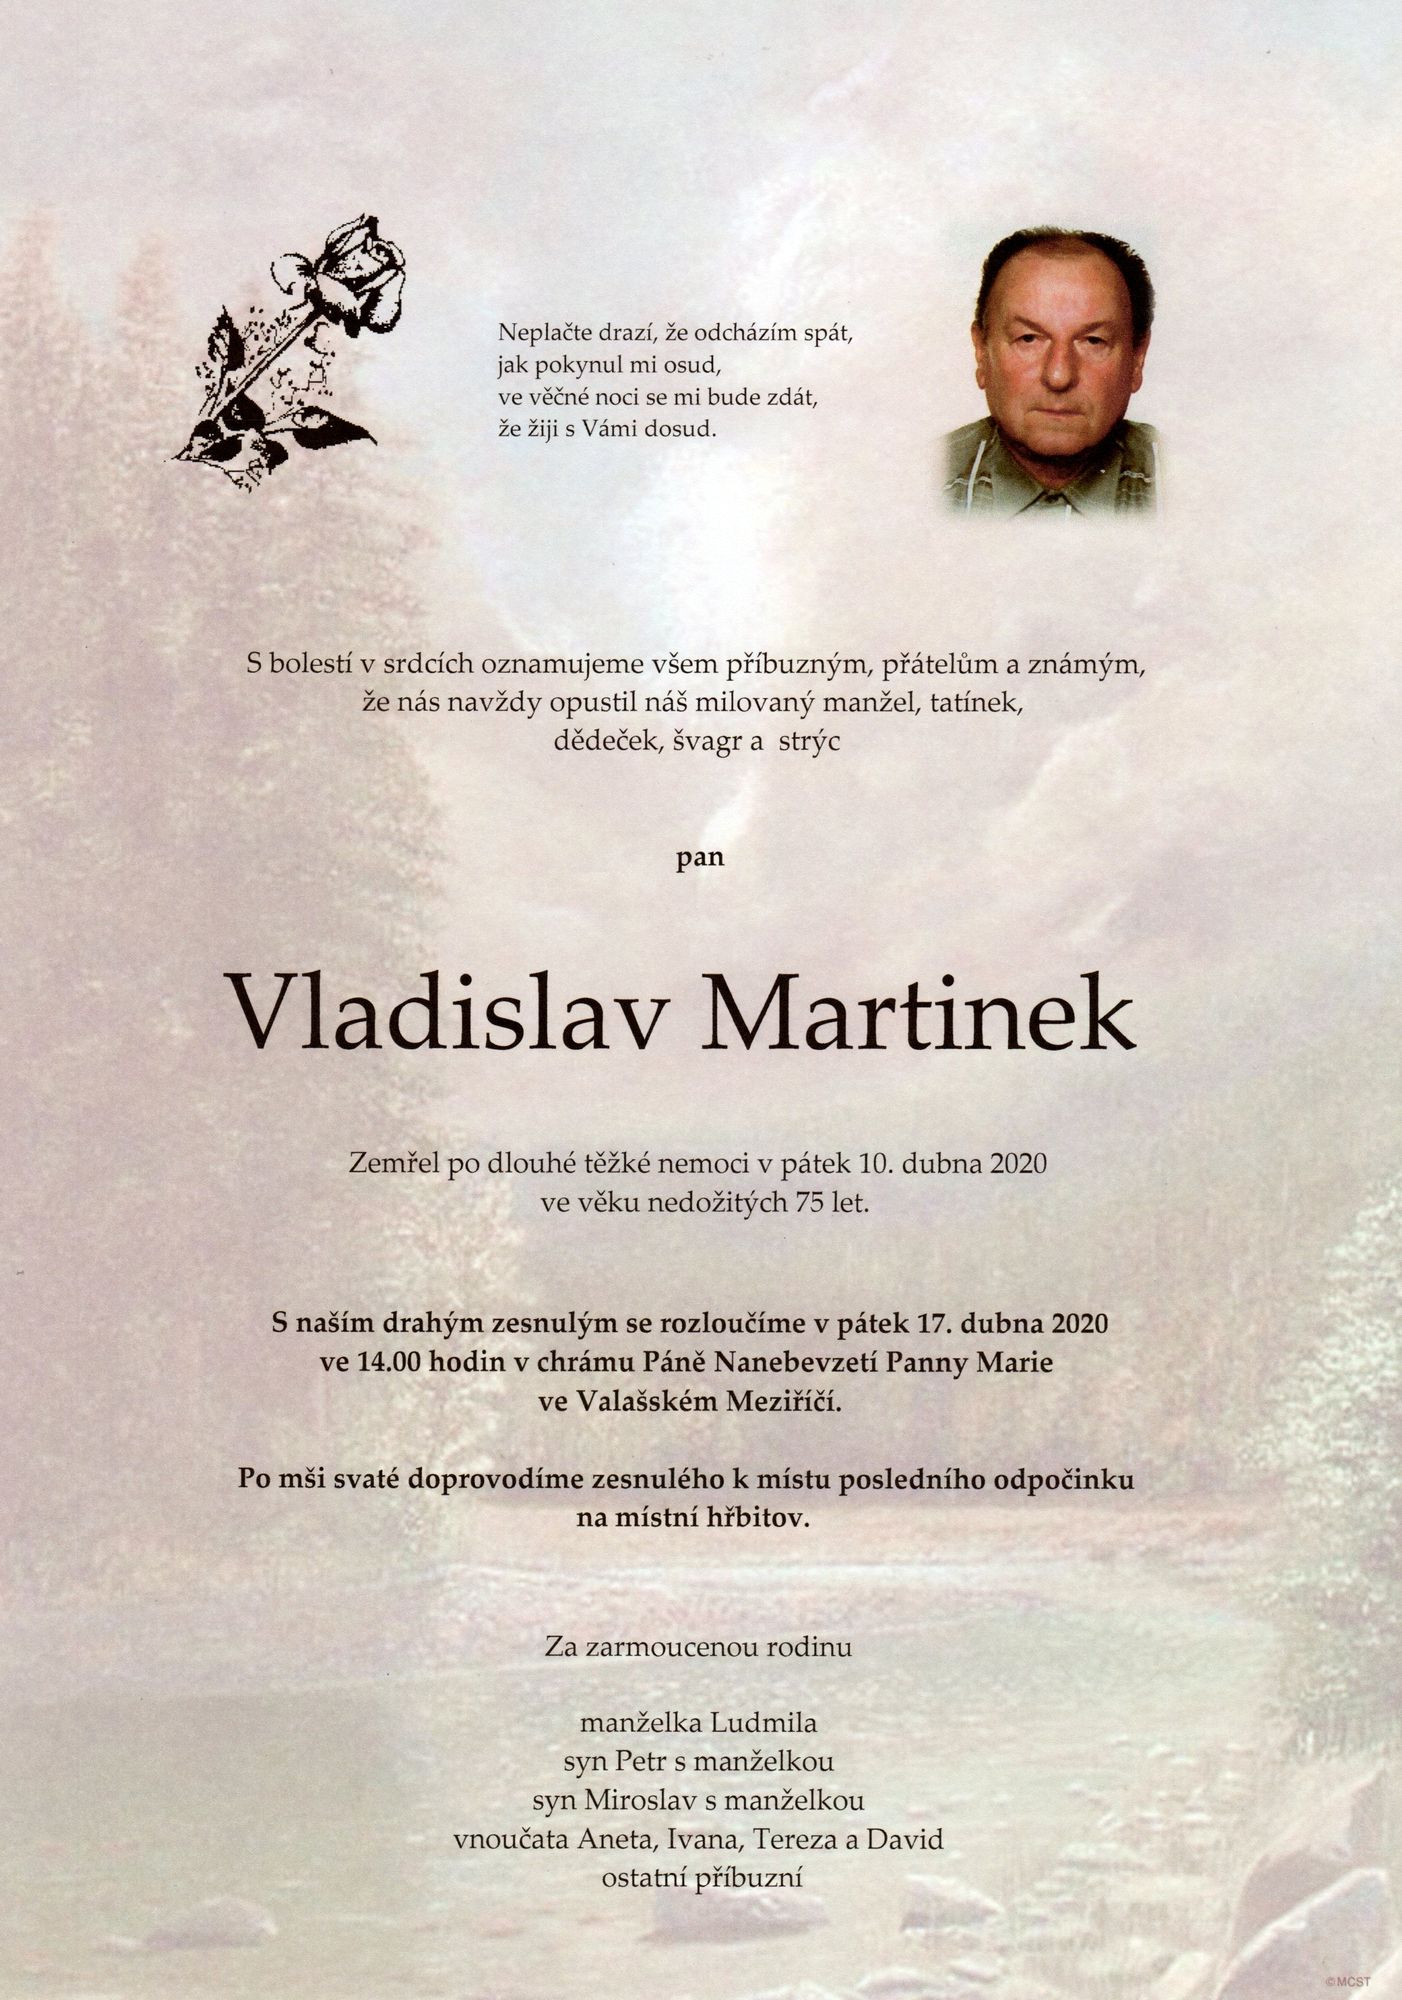 Vladislav Martinek